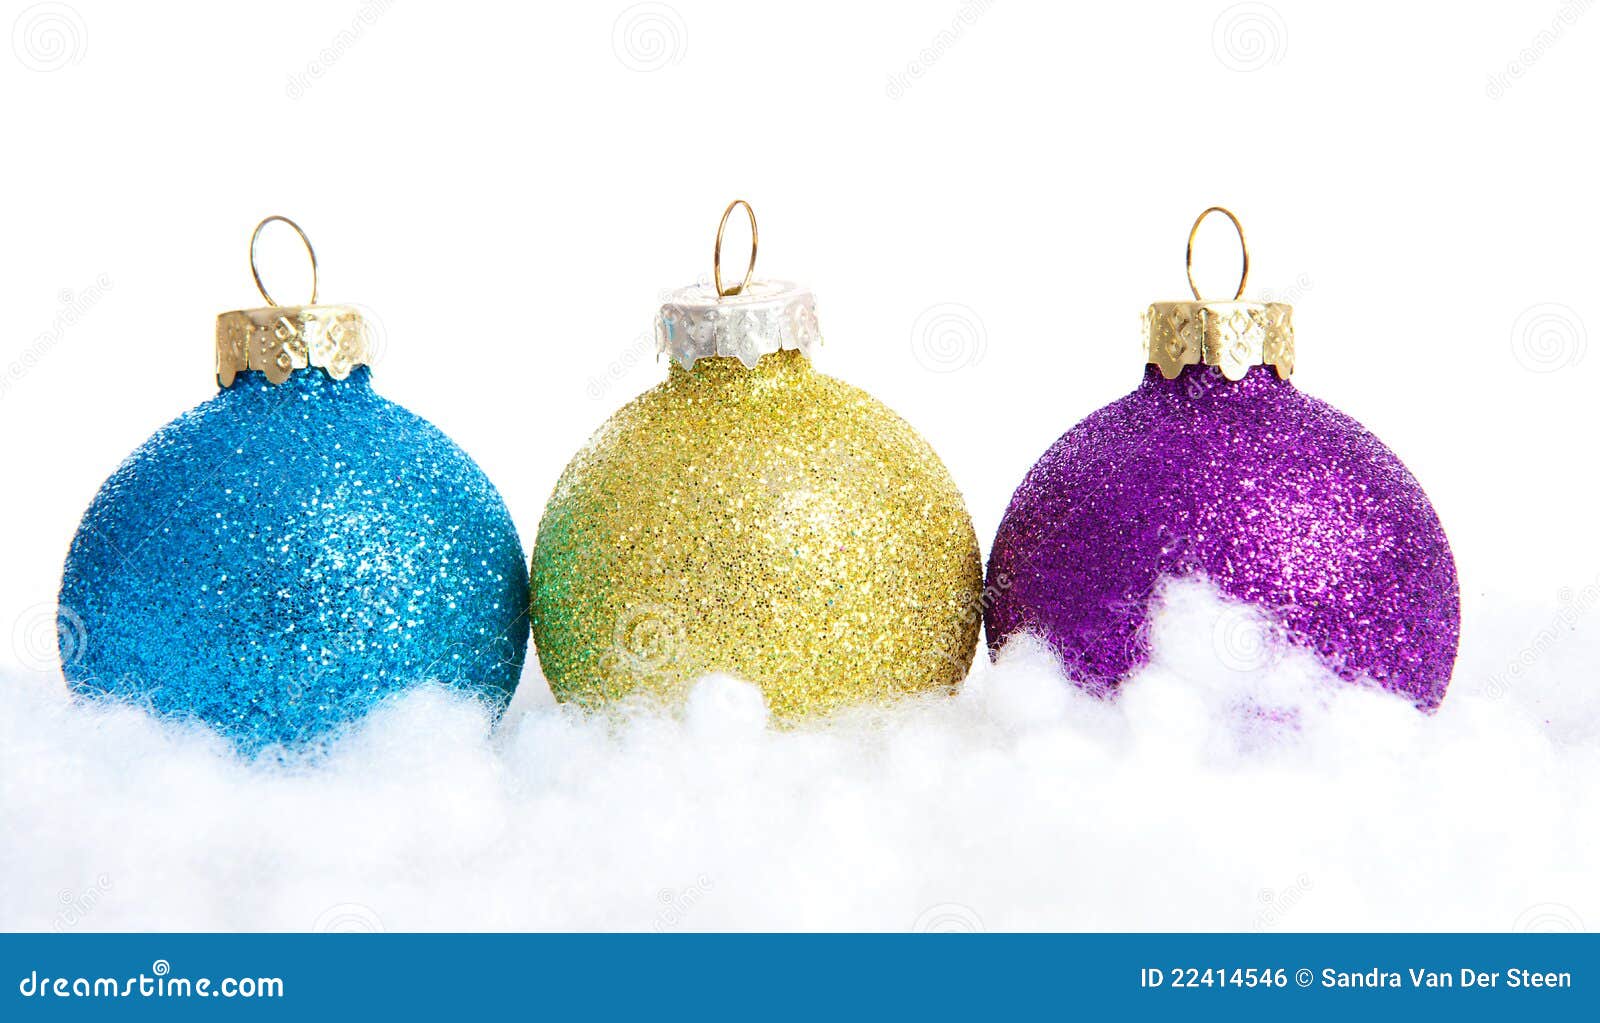 Colorful Glitter Christmas Balls Stock Photo  Image of noel, december